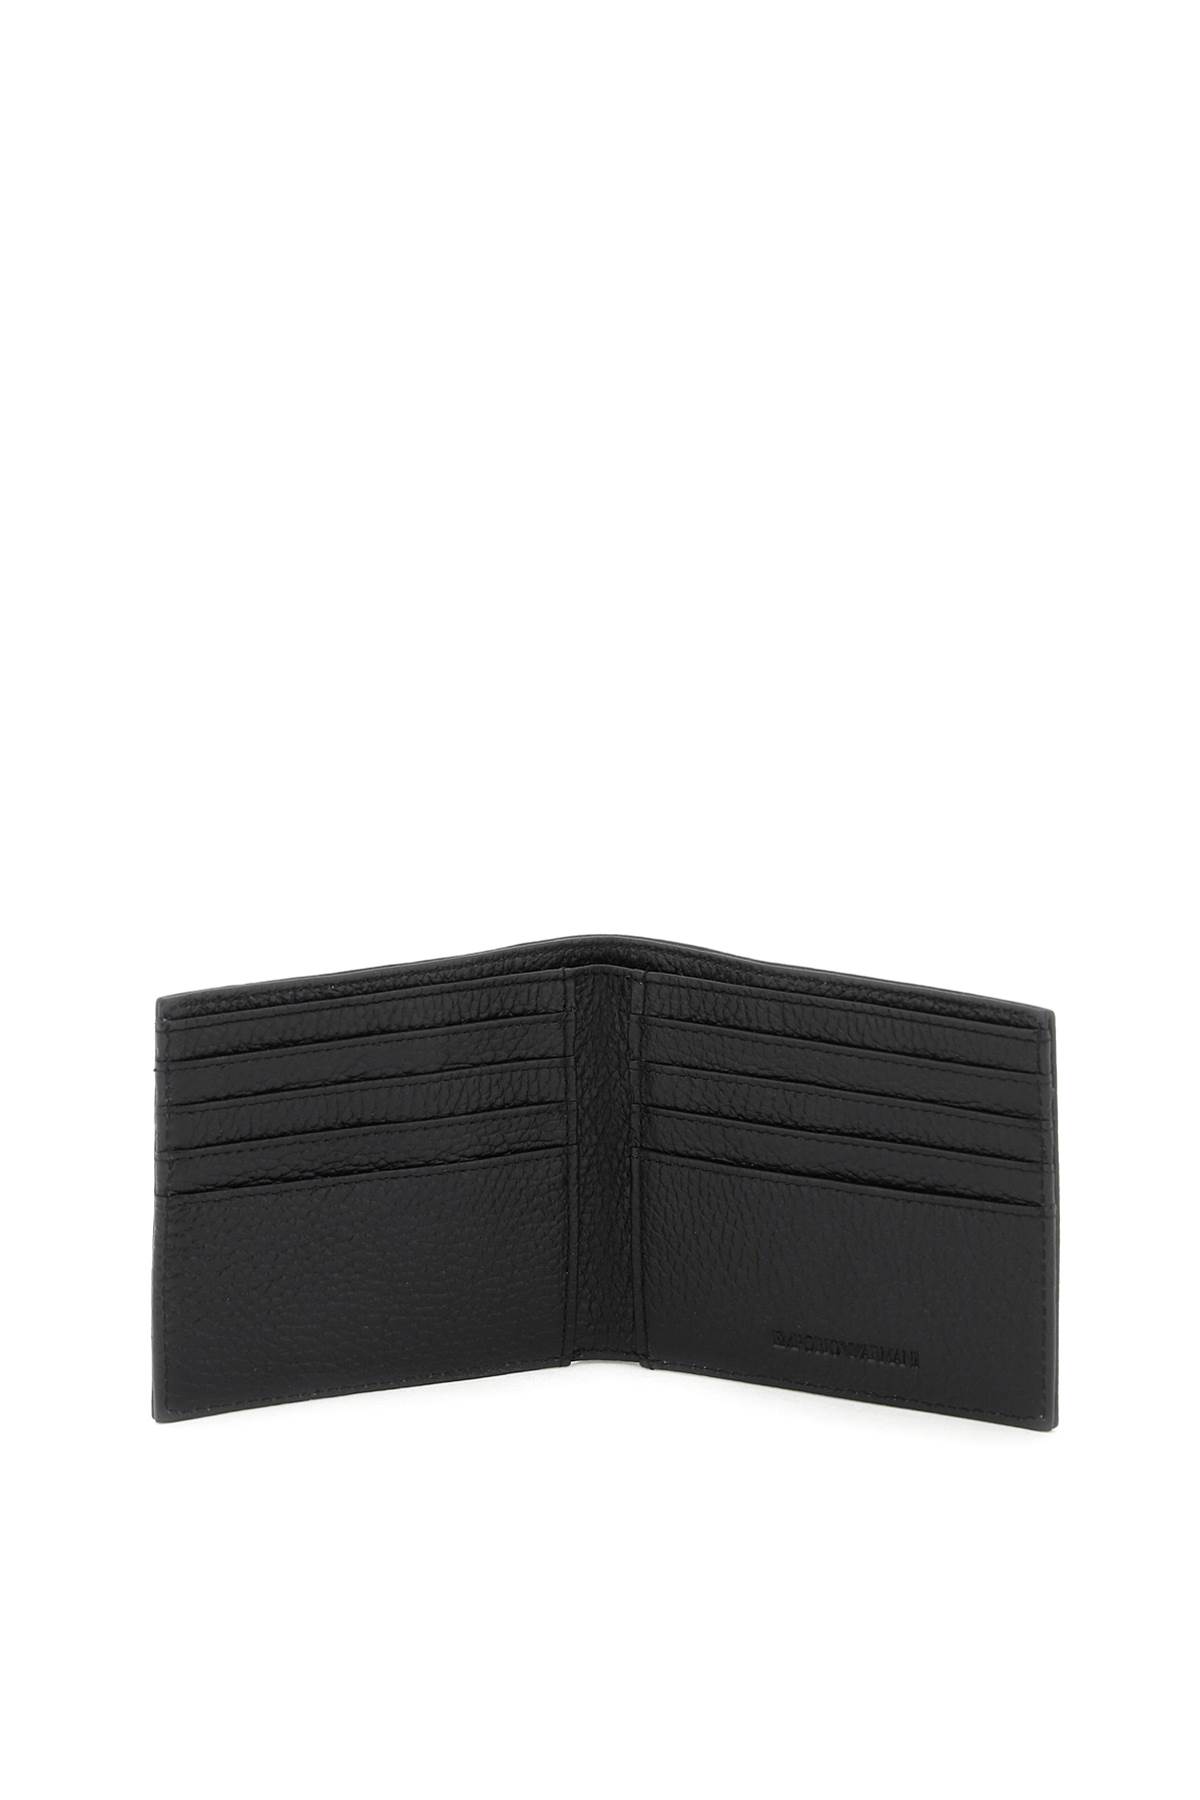 Shop Emporio Armani Grained Leather Wallet In Black